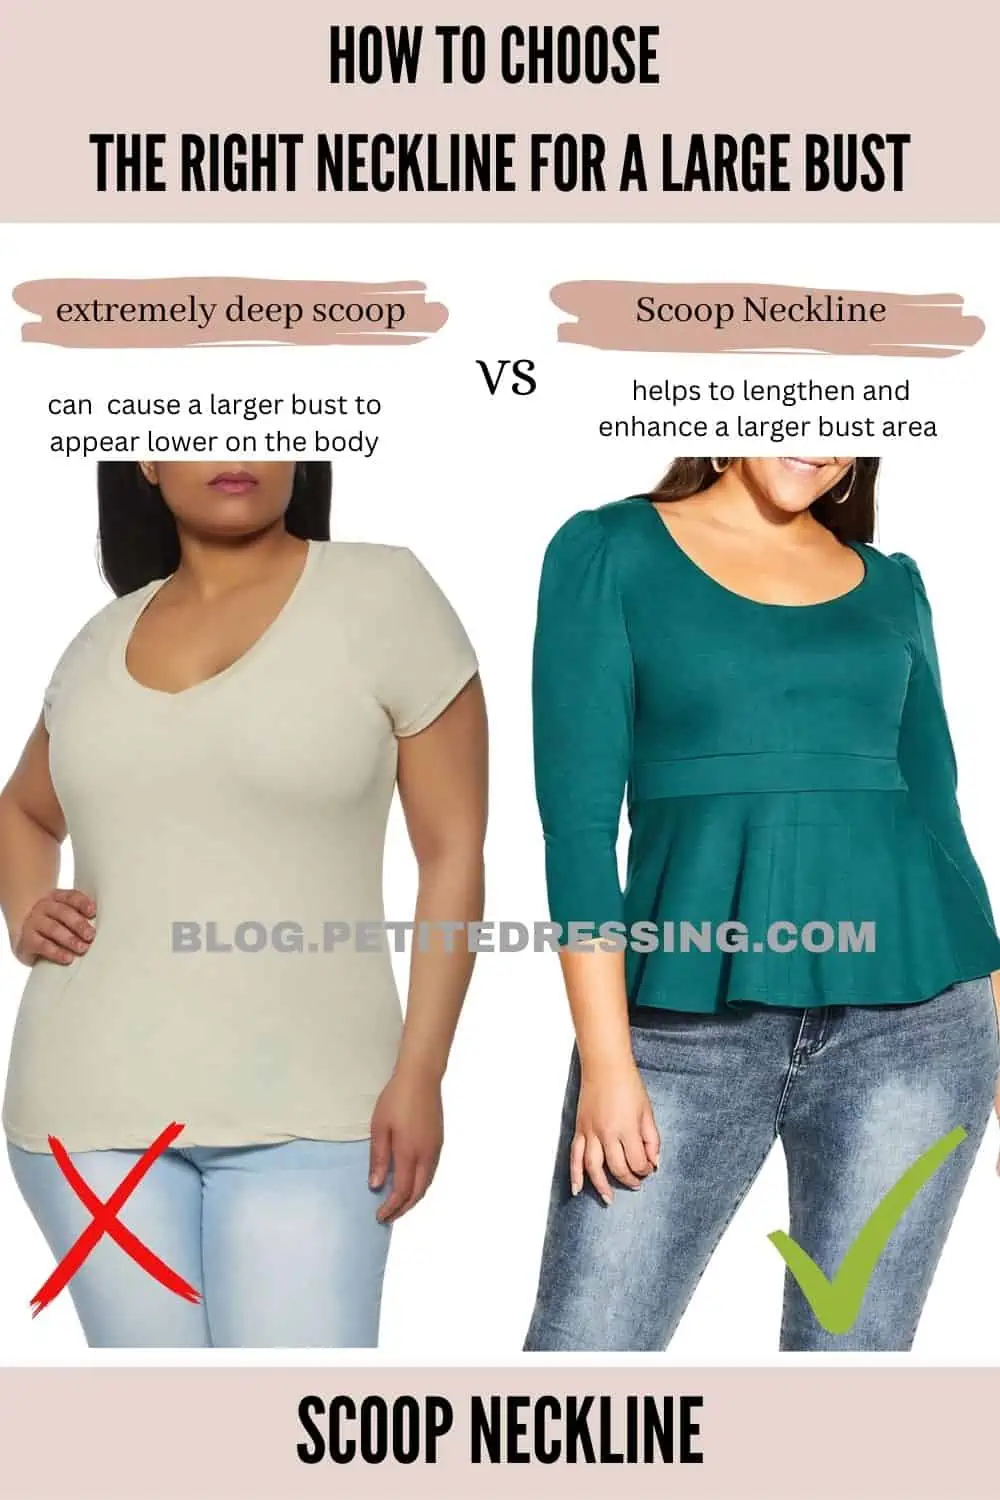 5 necklines for women who have heavy bust or upper body ❣️ #upperbodybulk  #heavybuststyling #heavybustnecklines#blousenecklines #heav